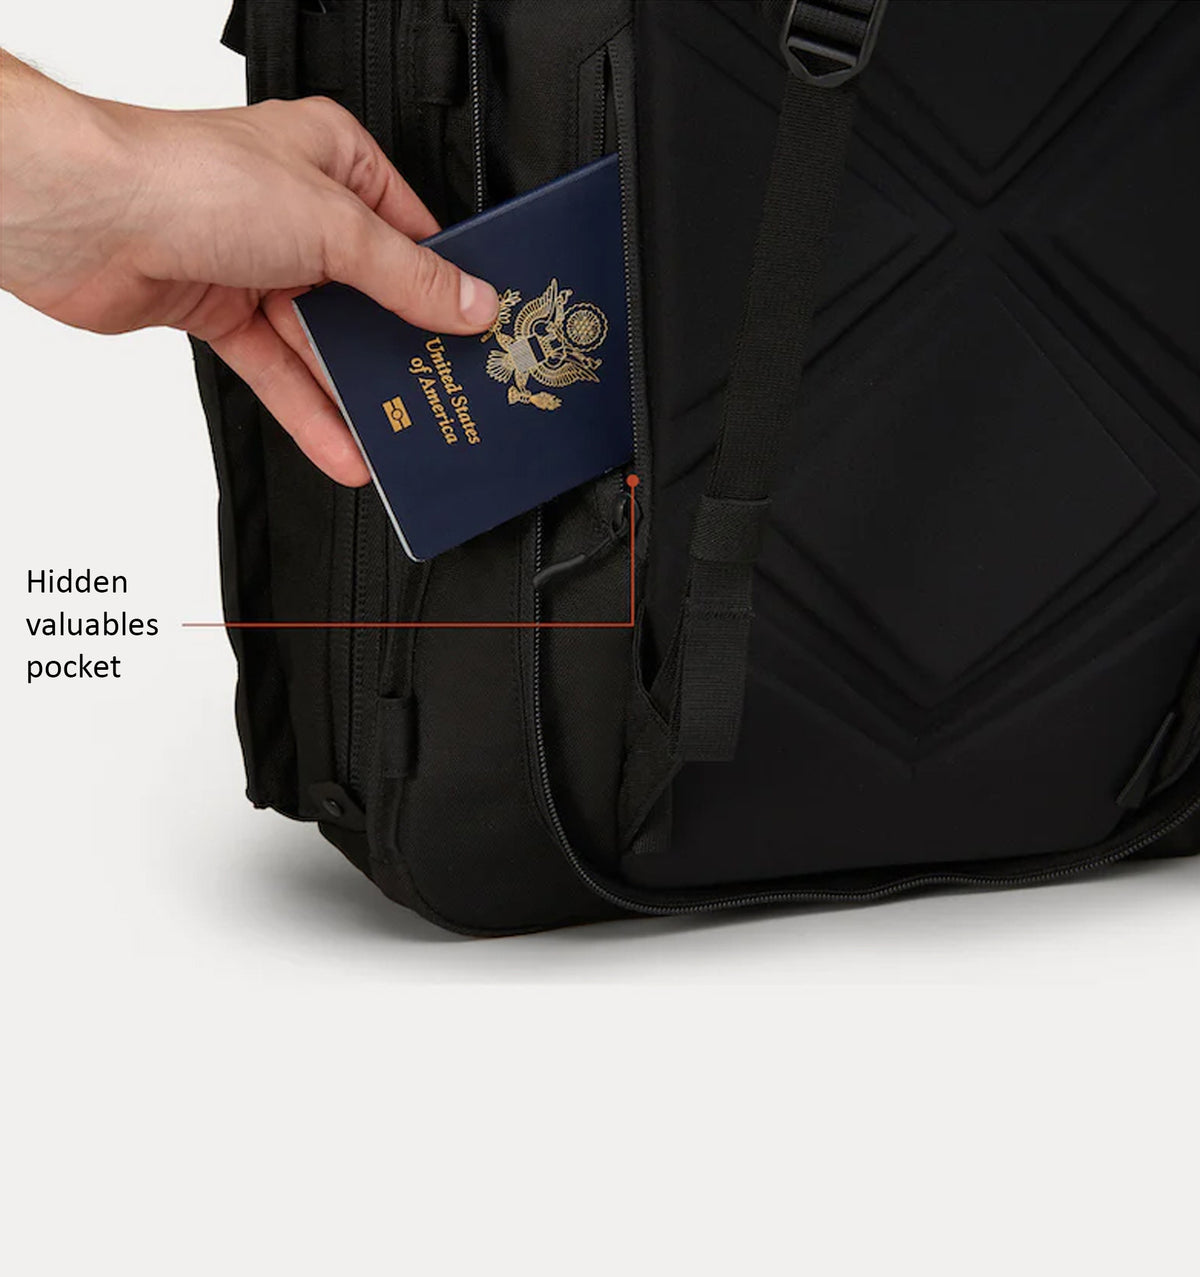 Minaal 16" Carry-on 3.0 Laptop Backpack 35L - Aoraki Black